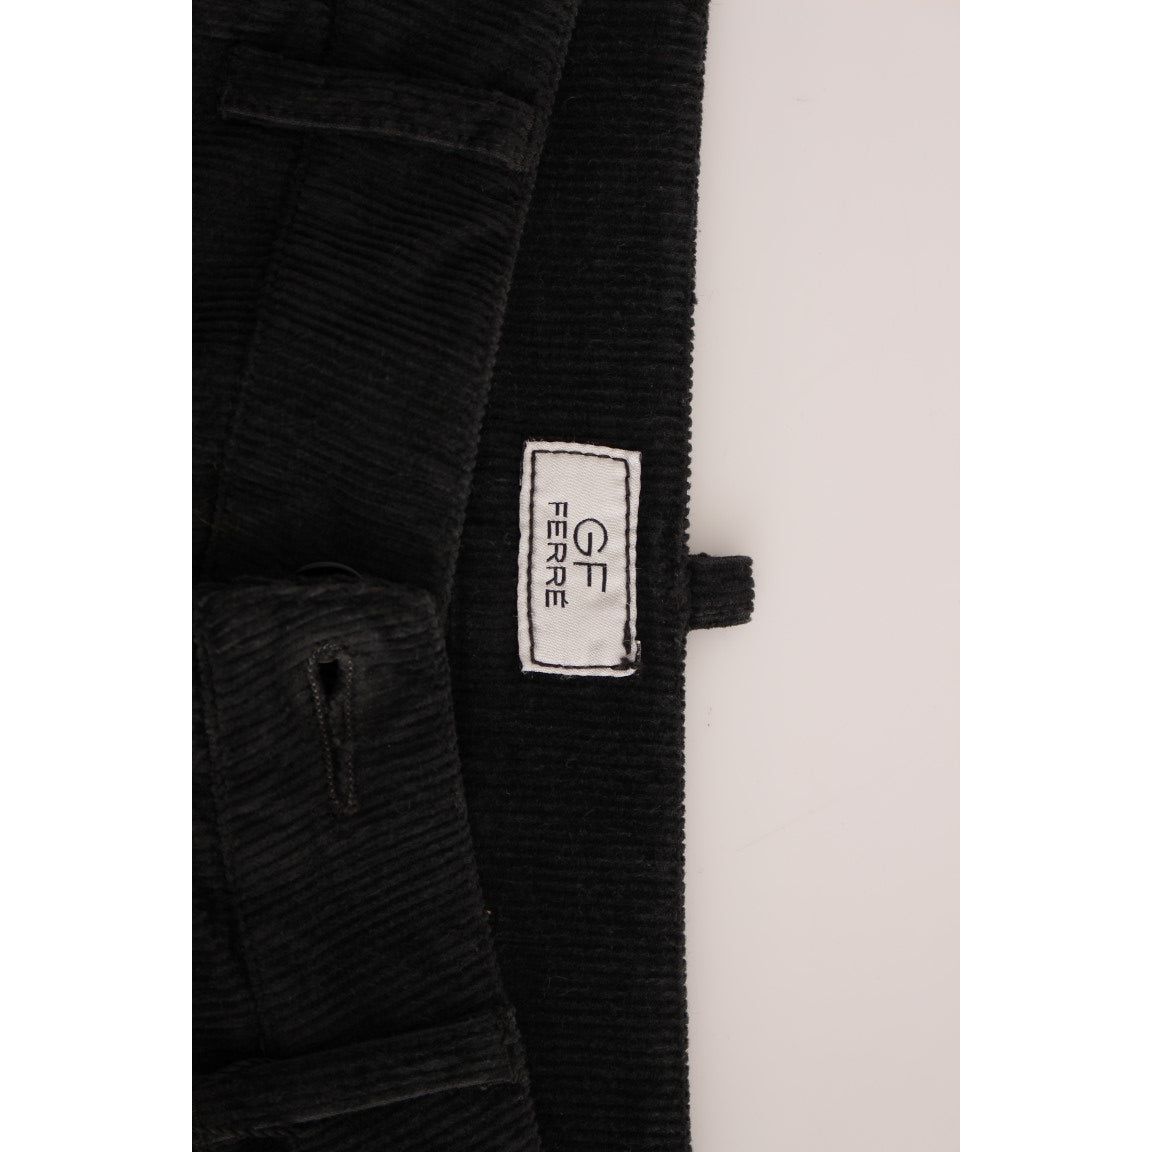 GF Ferre Elegant Black Cotton Corduroy Pants black-corduroy-cotton-straight-fit-pants Jeans & Pants 53278-black-corduroy-cotton-straight-fit-pants-6.jpg